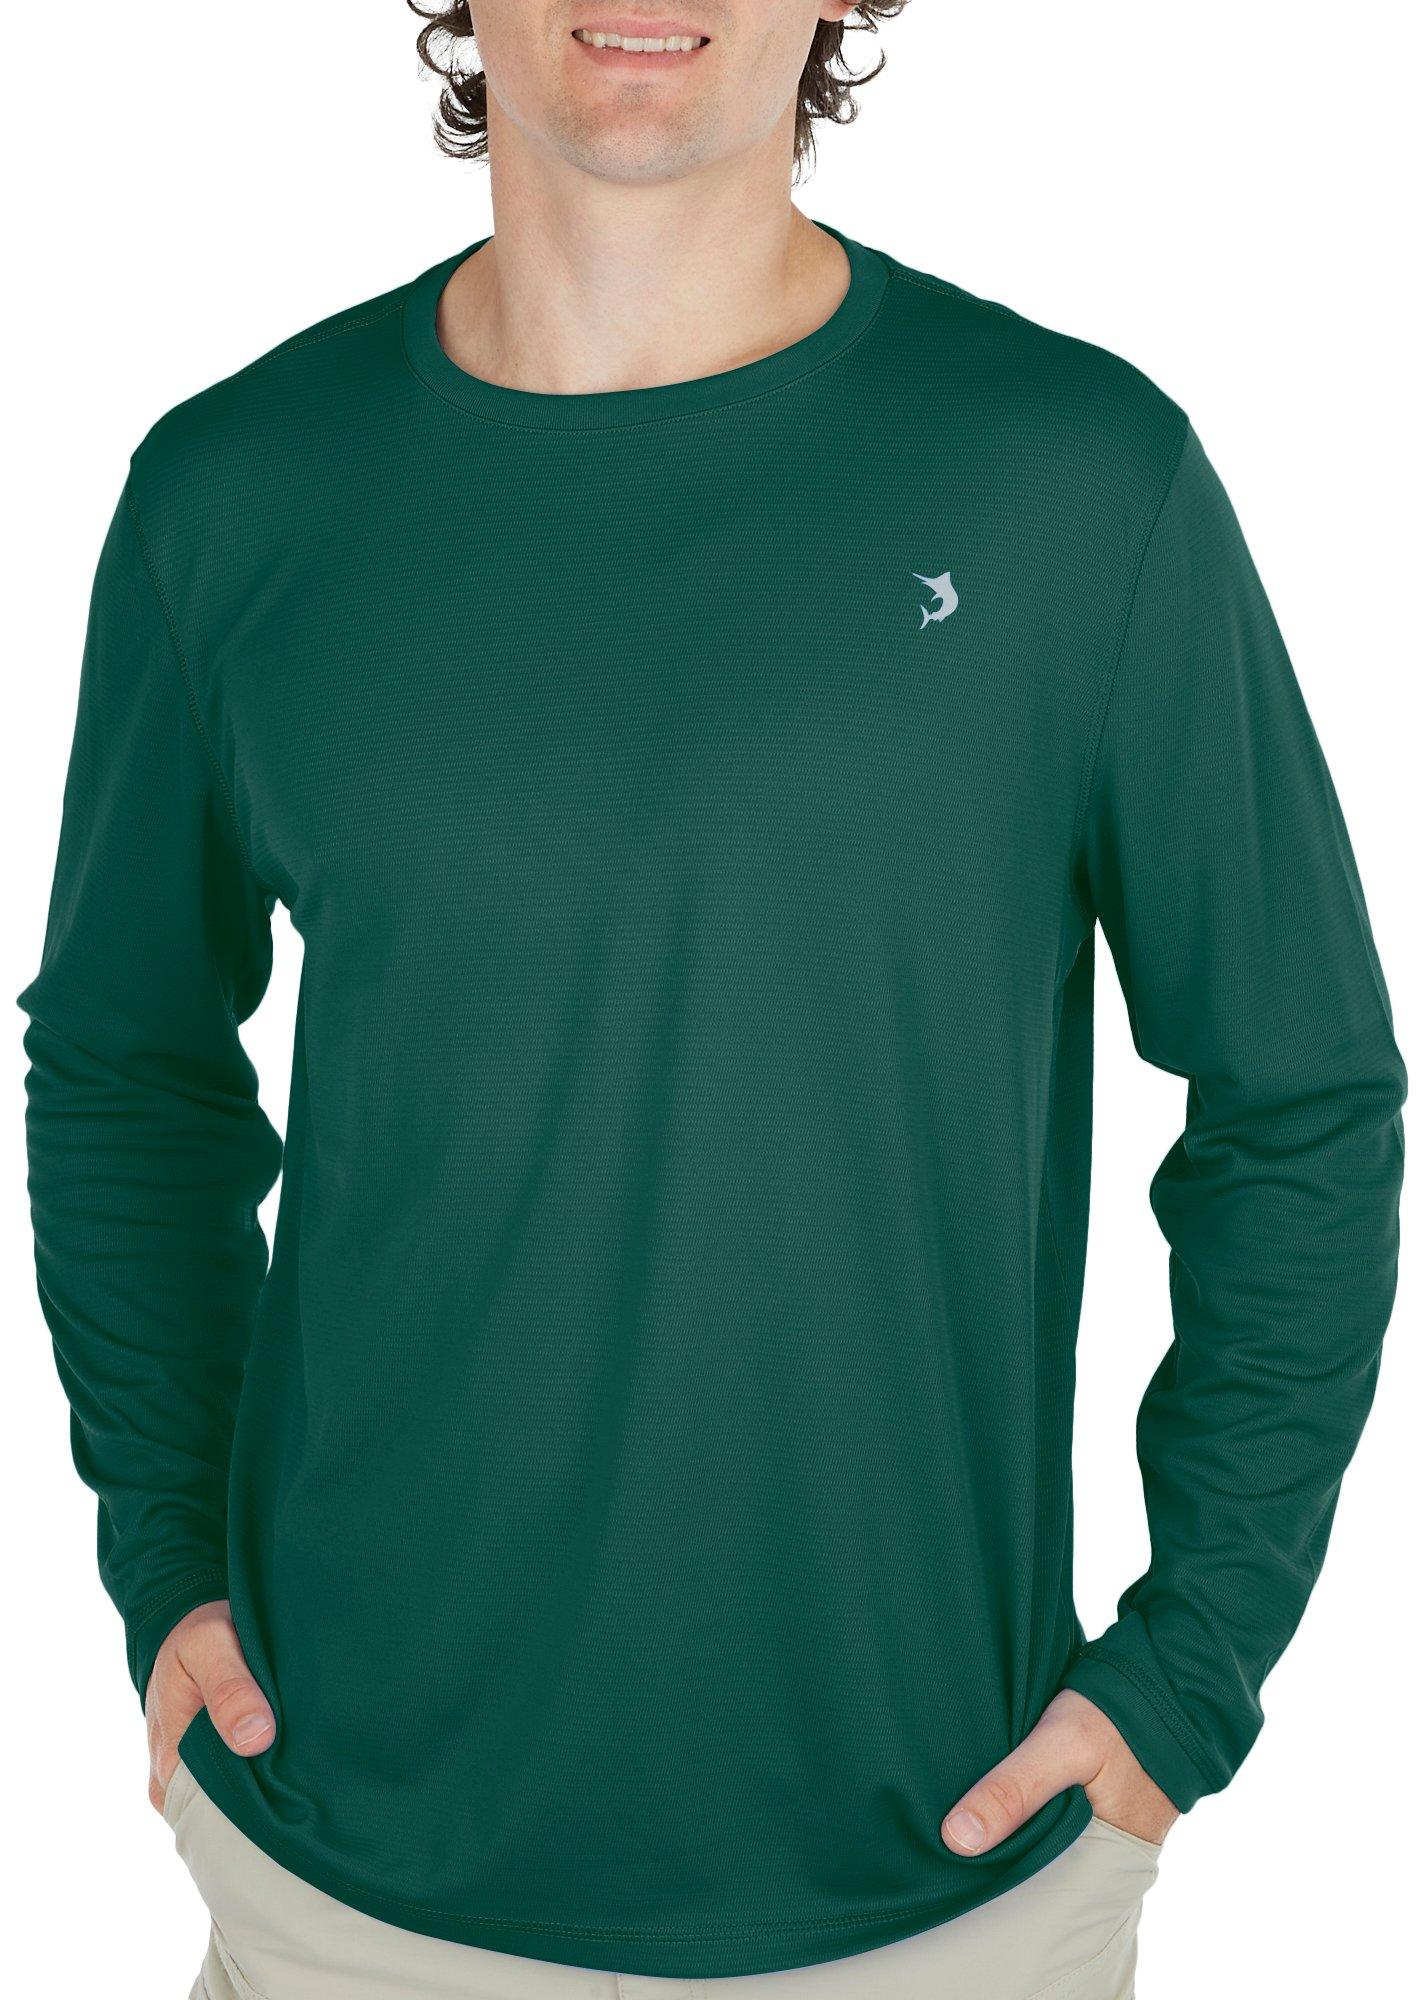 Reel Legends Mens Shirt S Green Fishing Long Sleeve Hook Pullover Top  888750035042